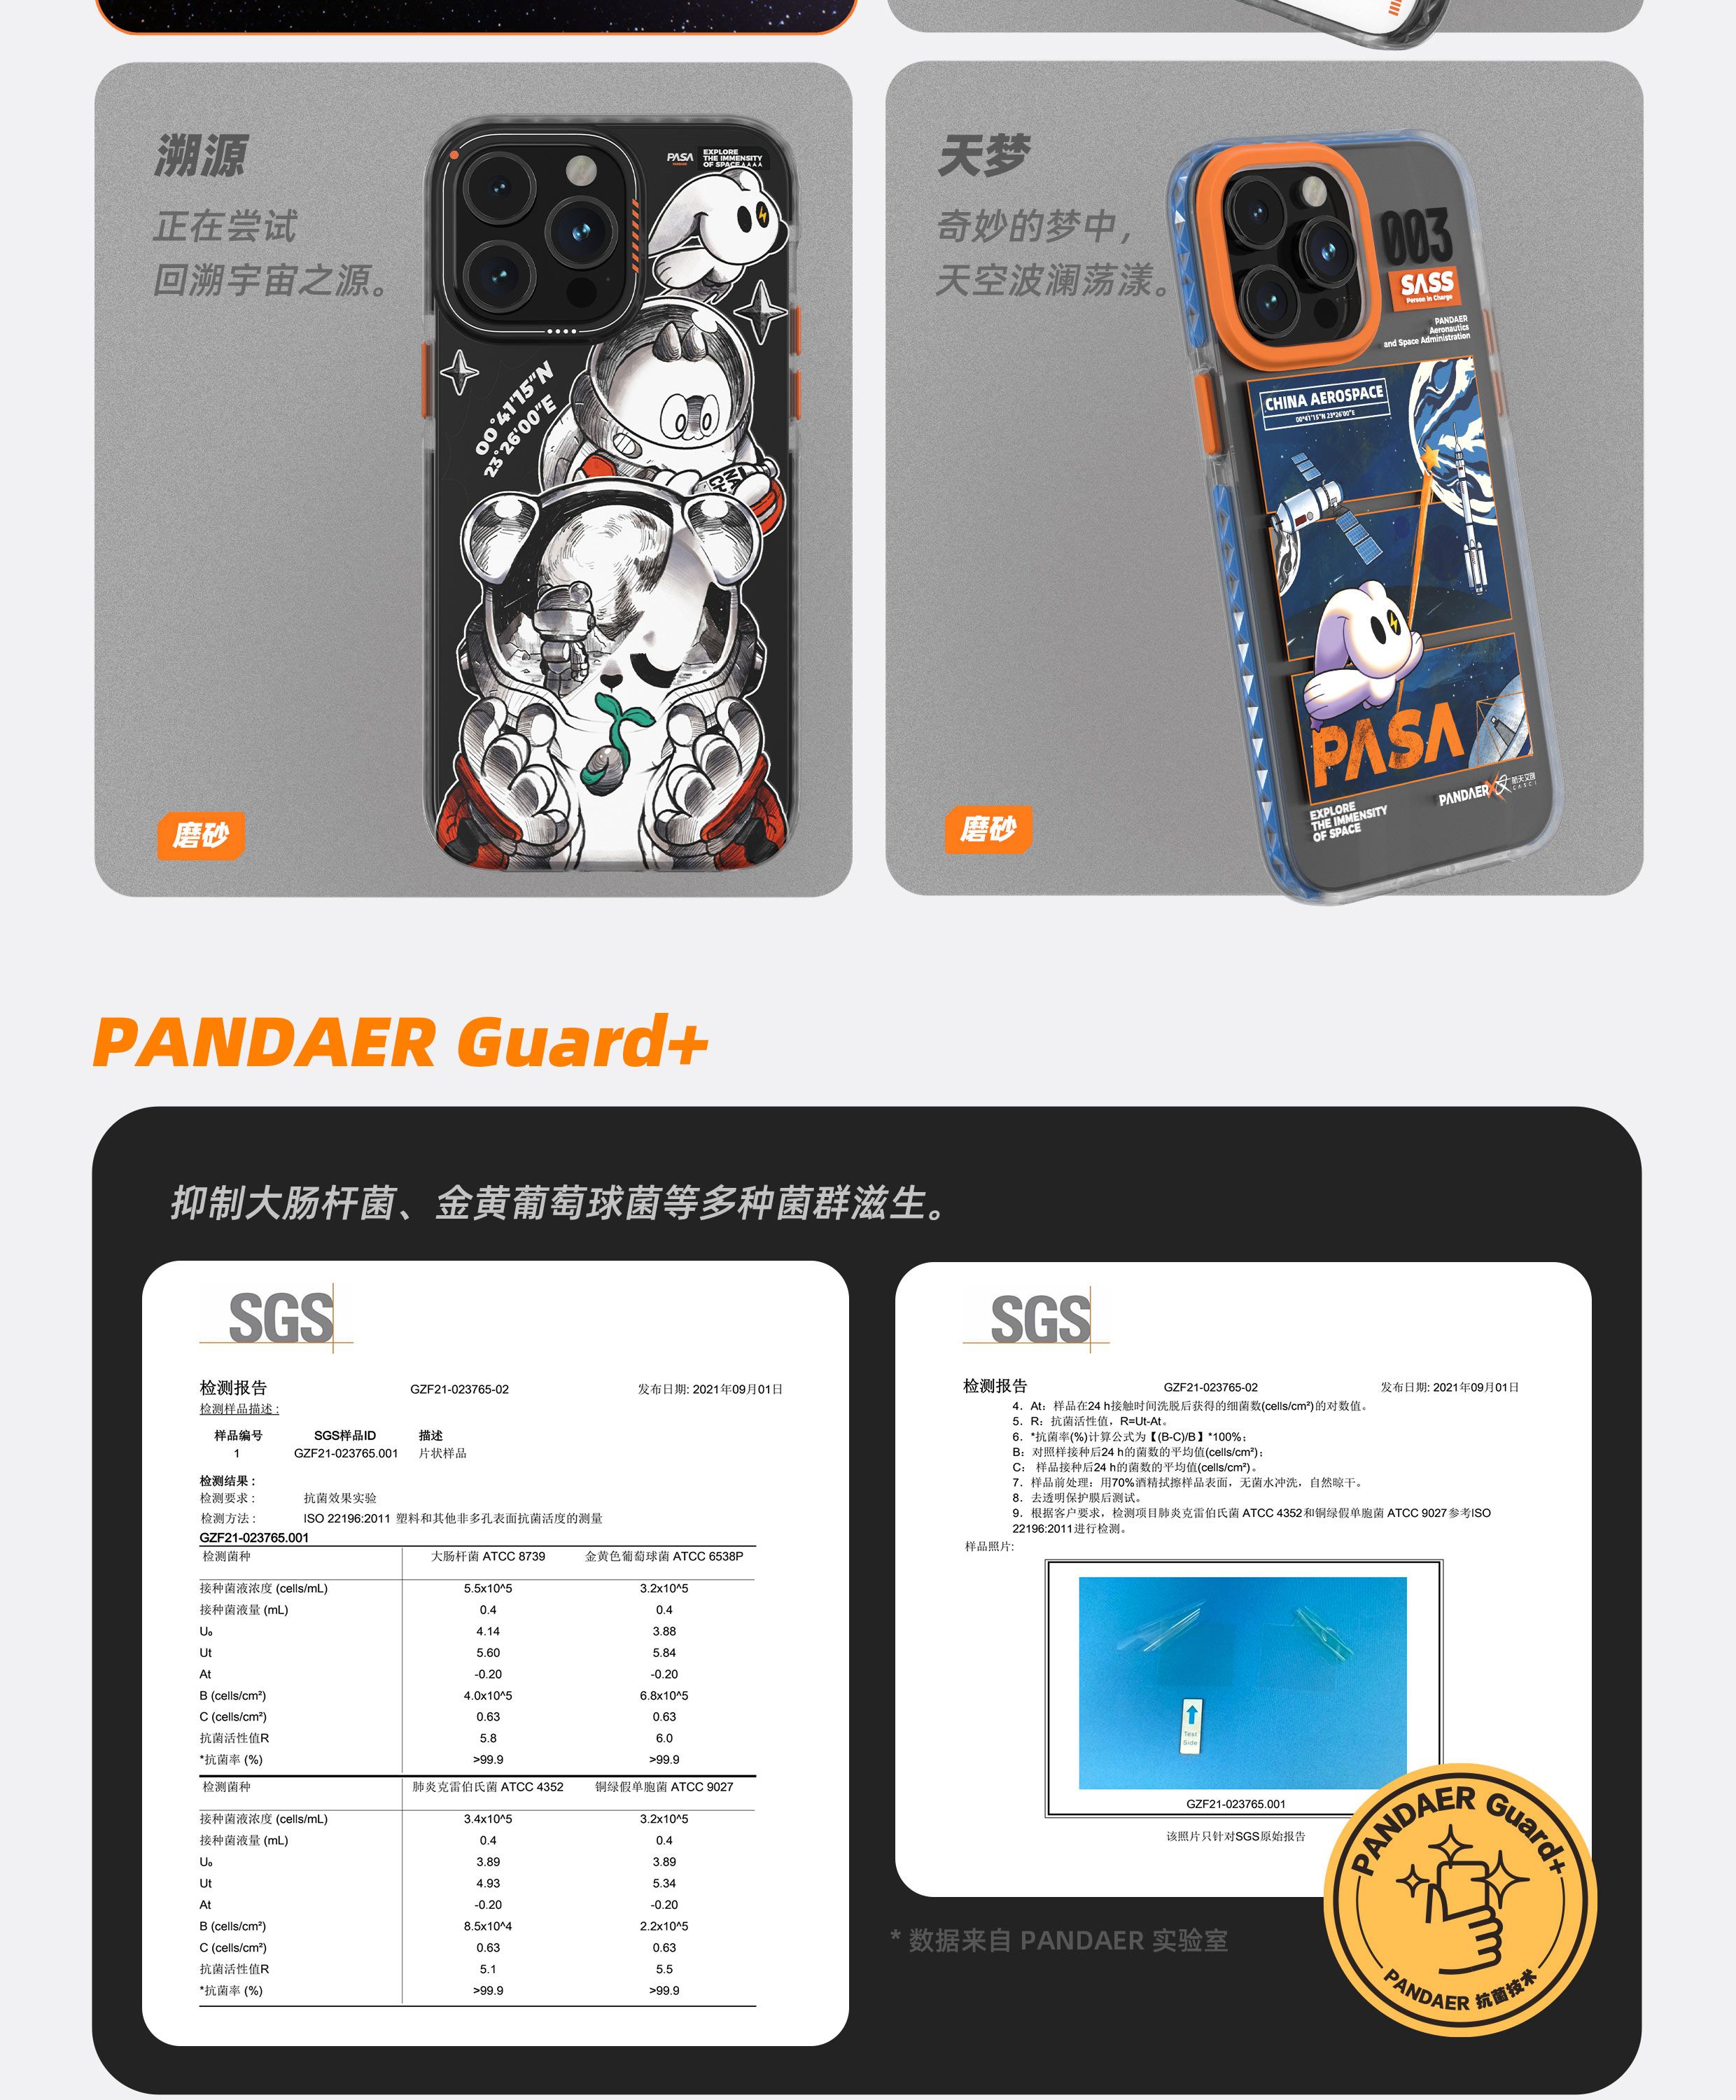 Meizu PANDAER PASA Case for iPhone 14 Pro Max